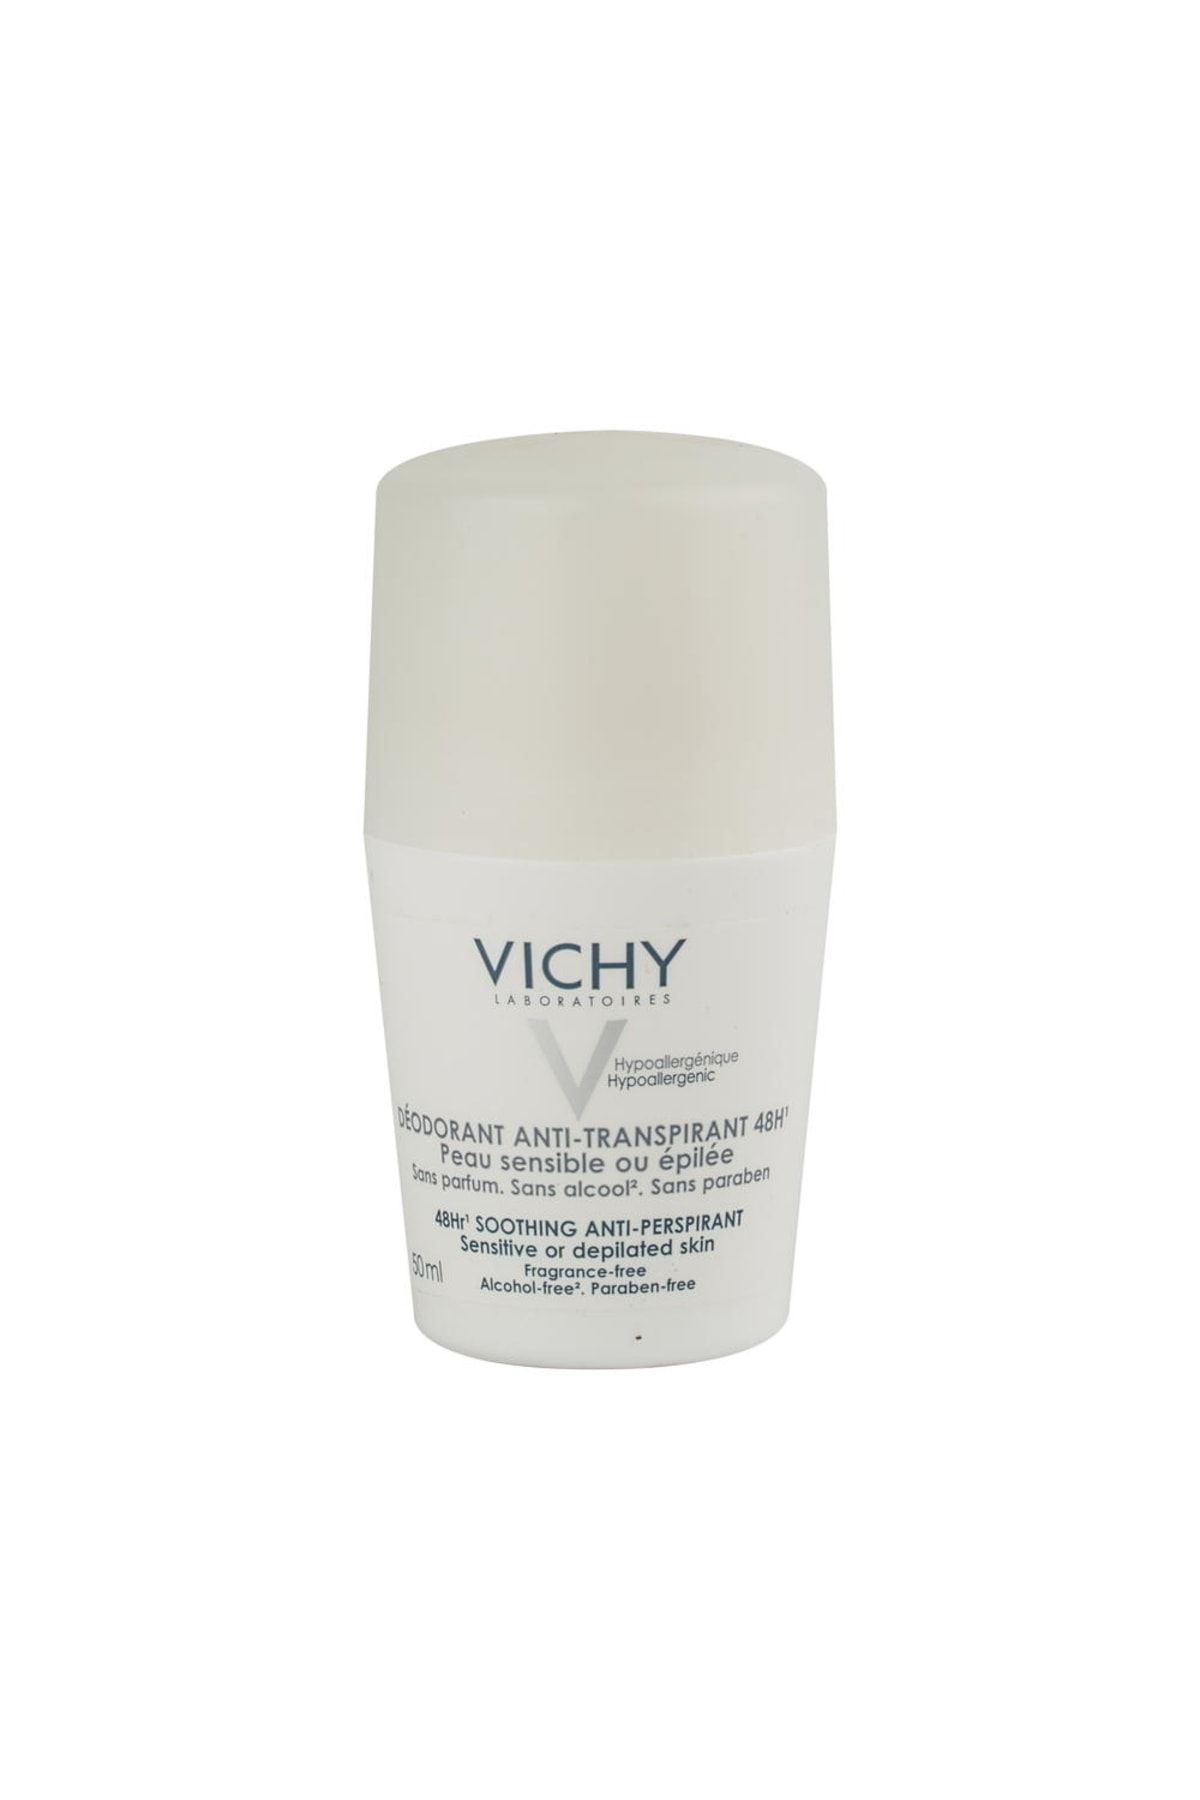 Vichy ضد تعریق پوست حساس و حساس به تعریق Vichy 48 ساعته 50 میلی لیتر